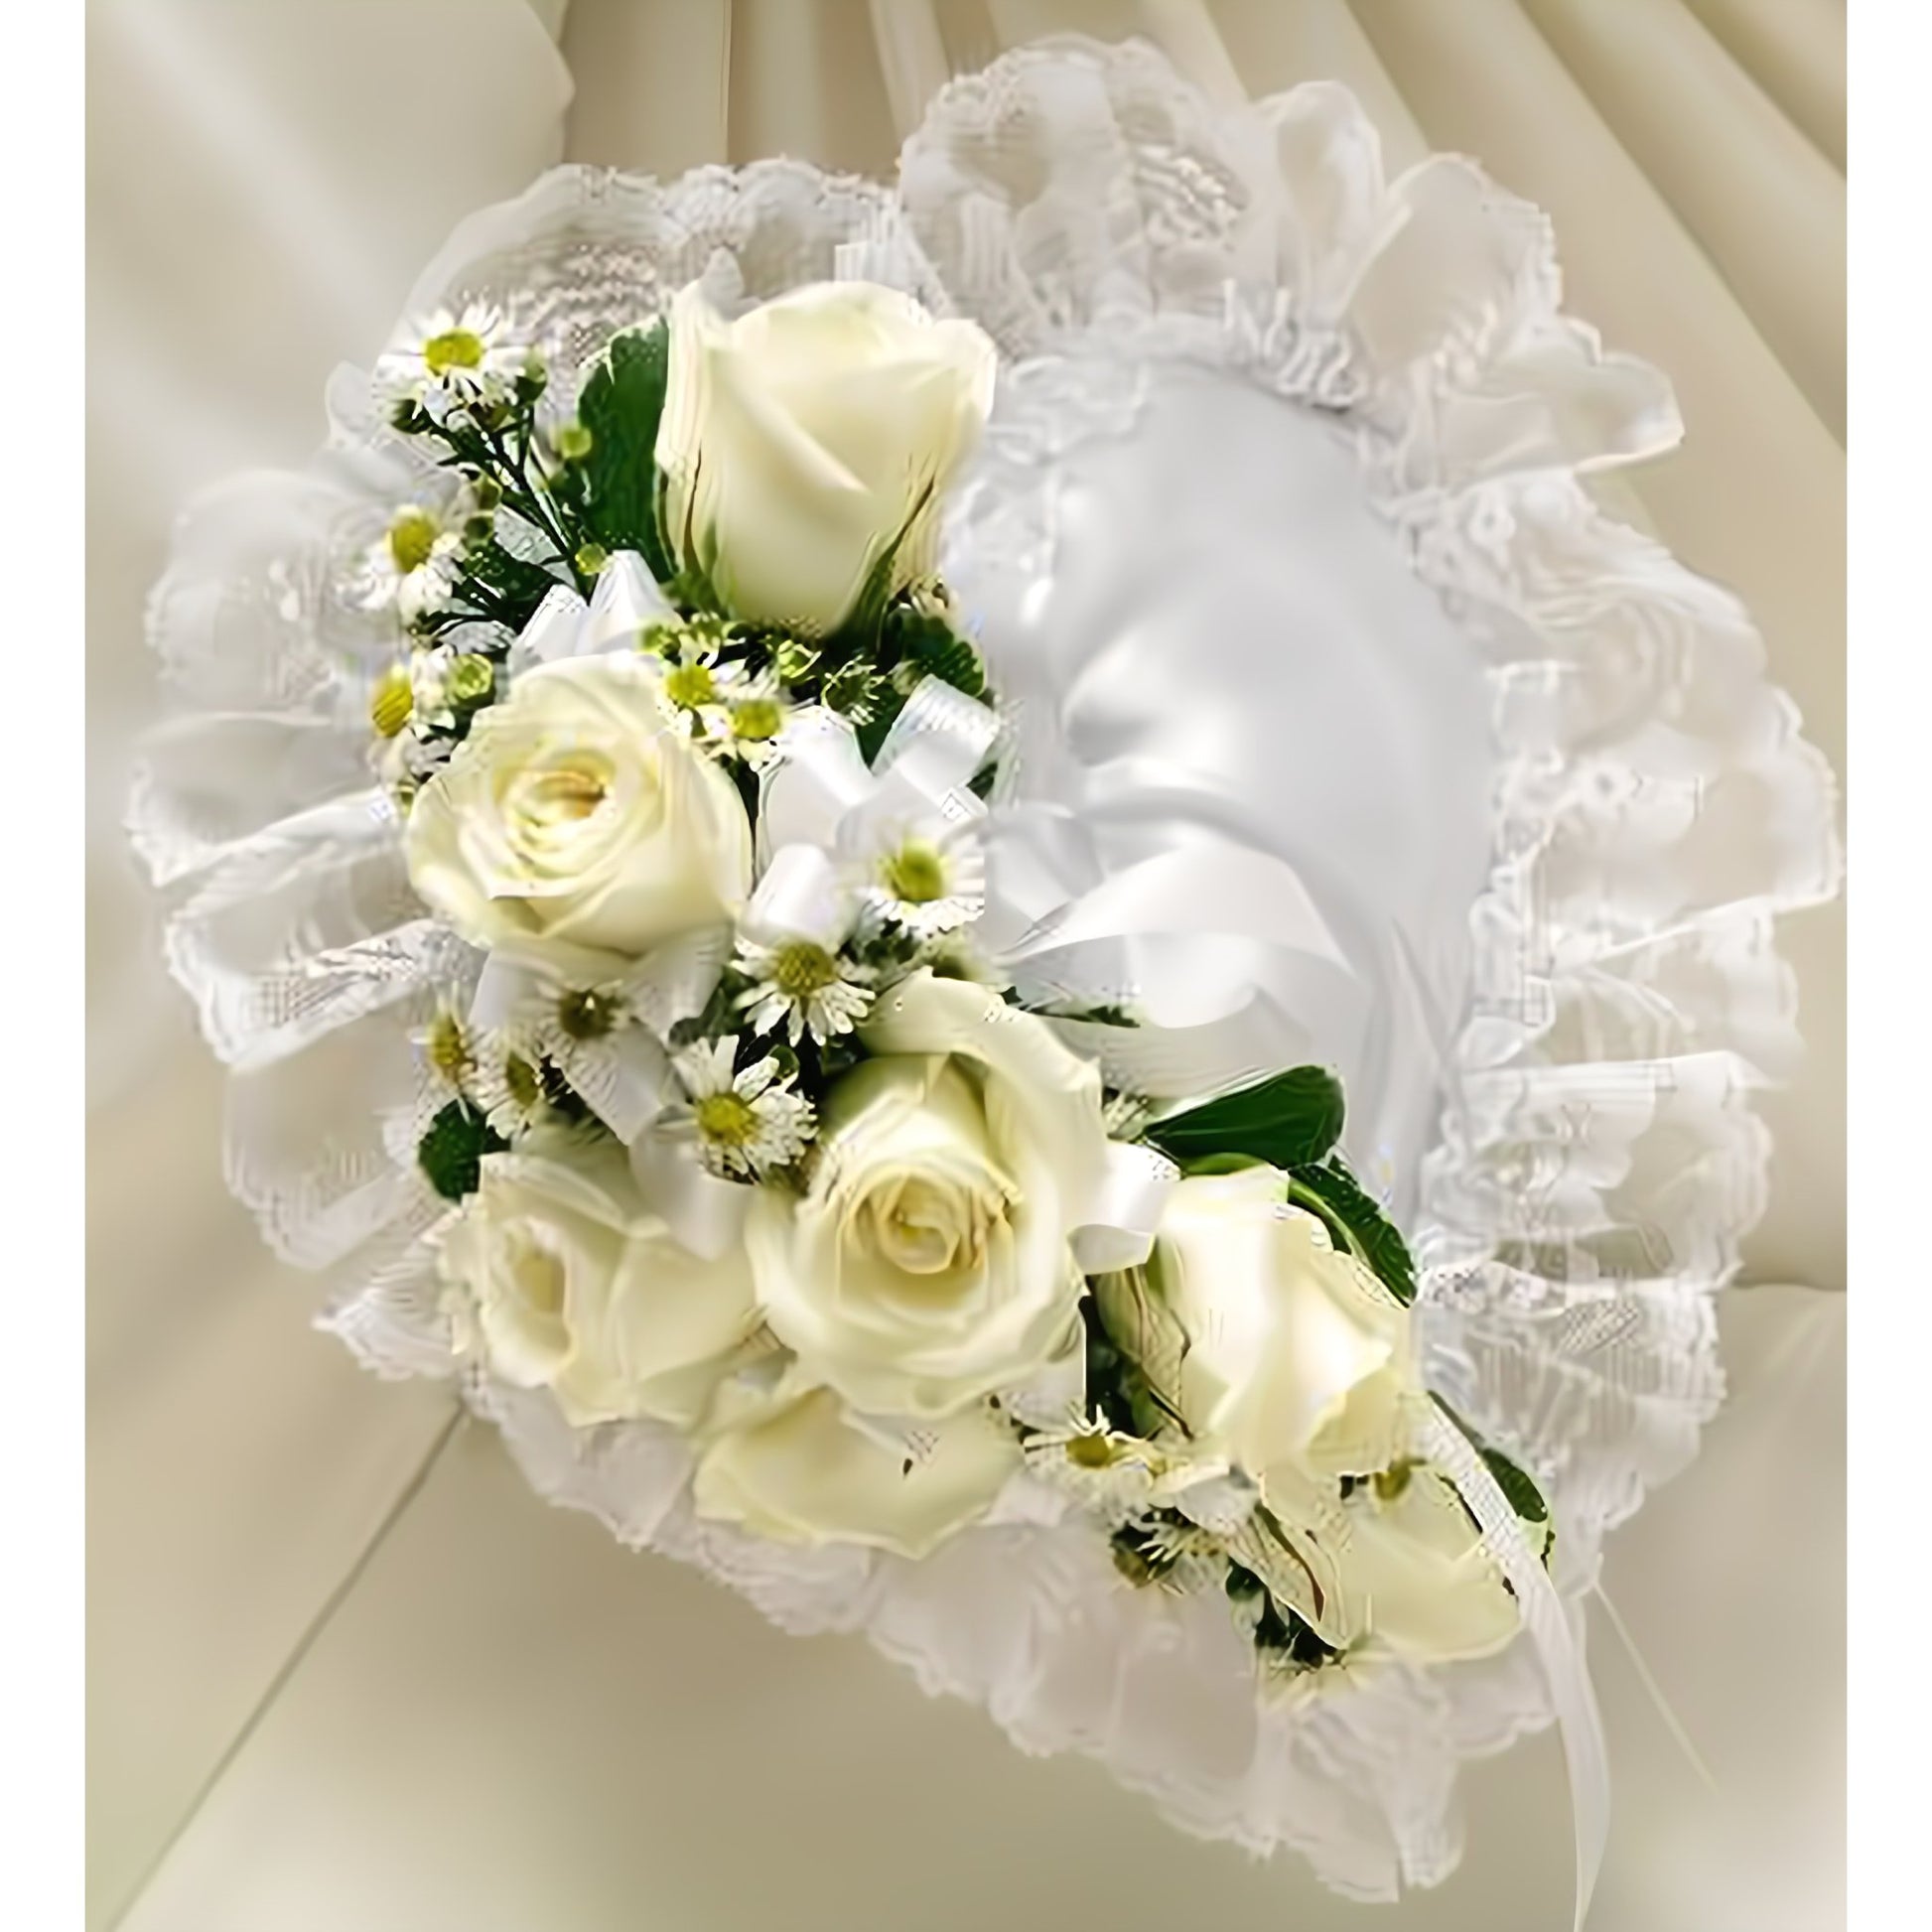 White Satin Heart Casket Pillow - Floral_Arrangement - Flower Delivery NYC